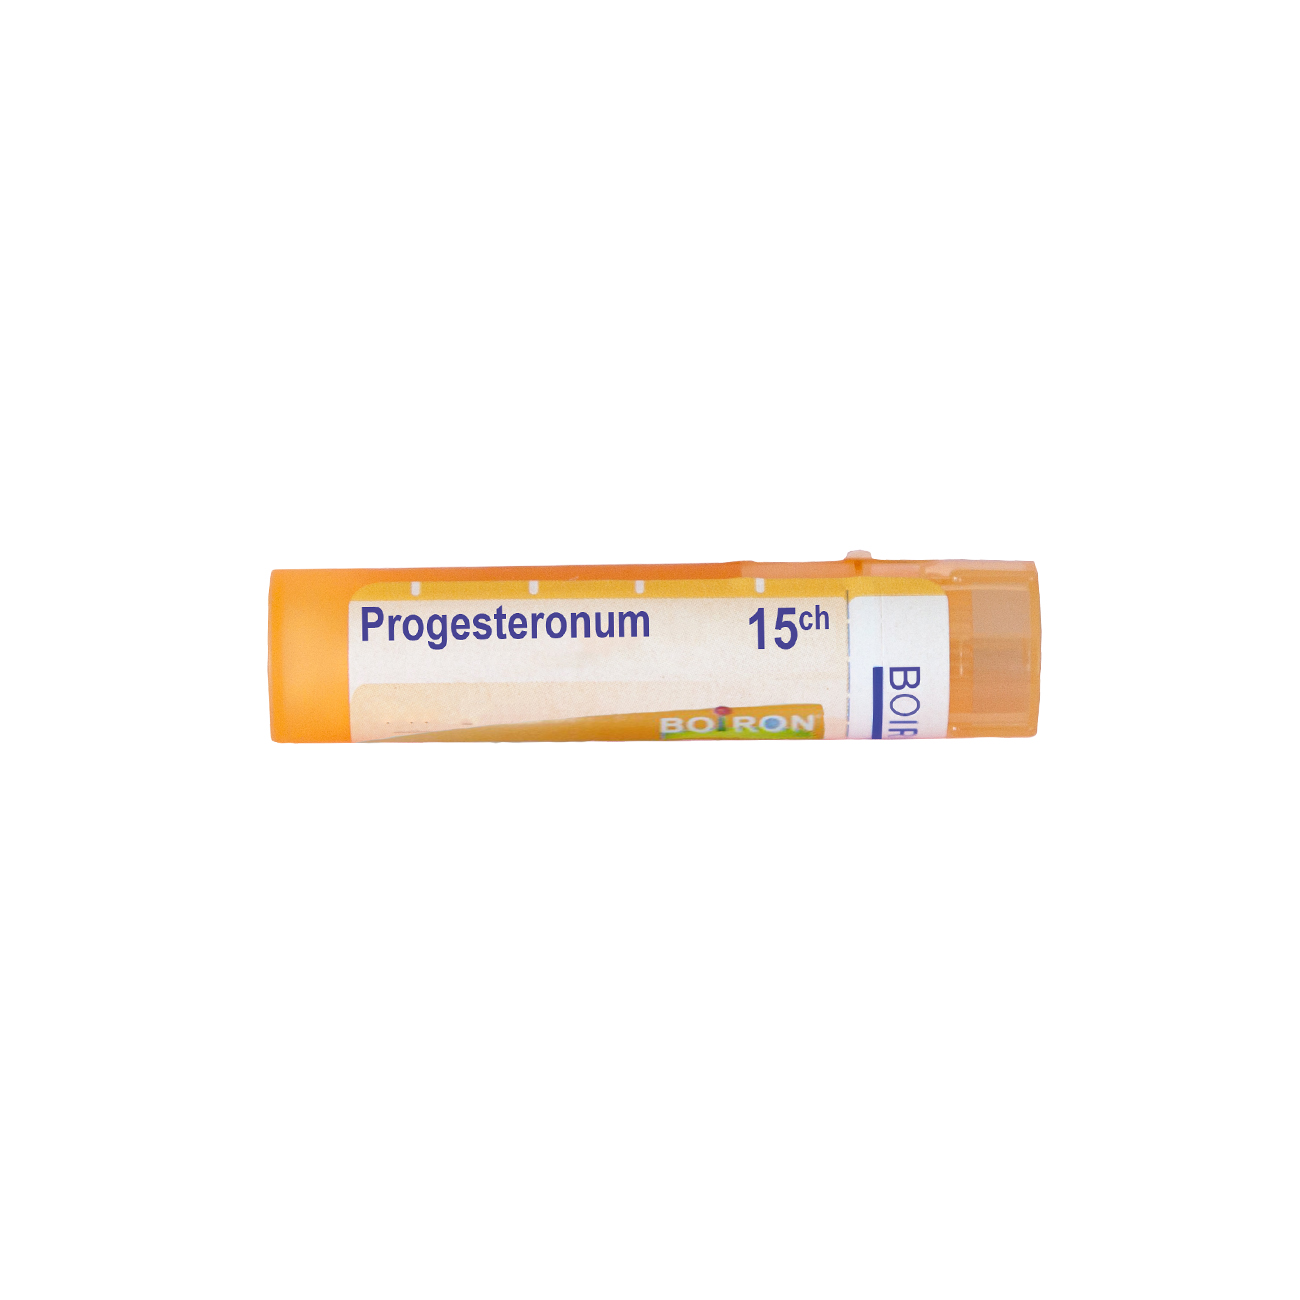 Прогестеронум 15 СН - Boiron - Аптеки 36.6